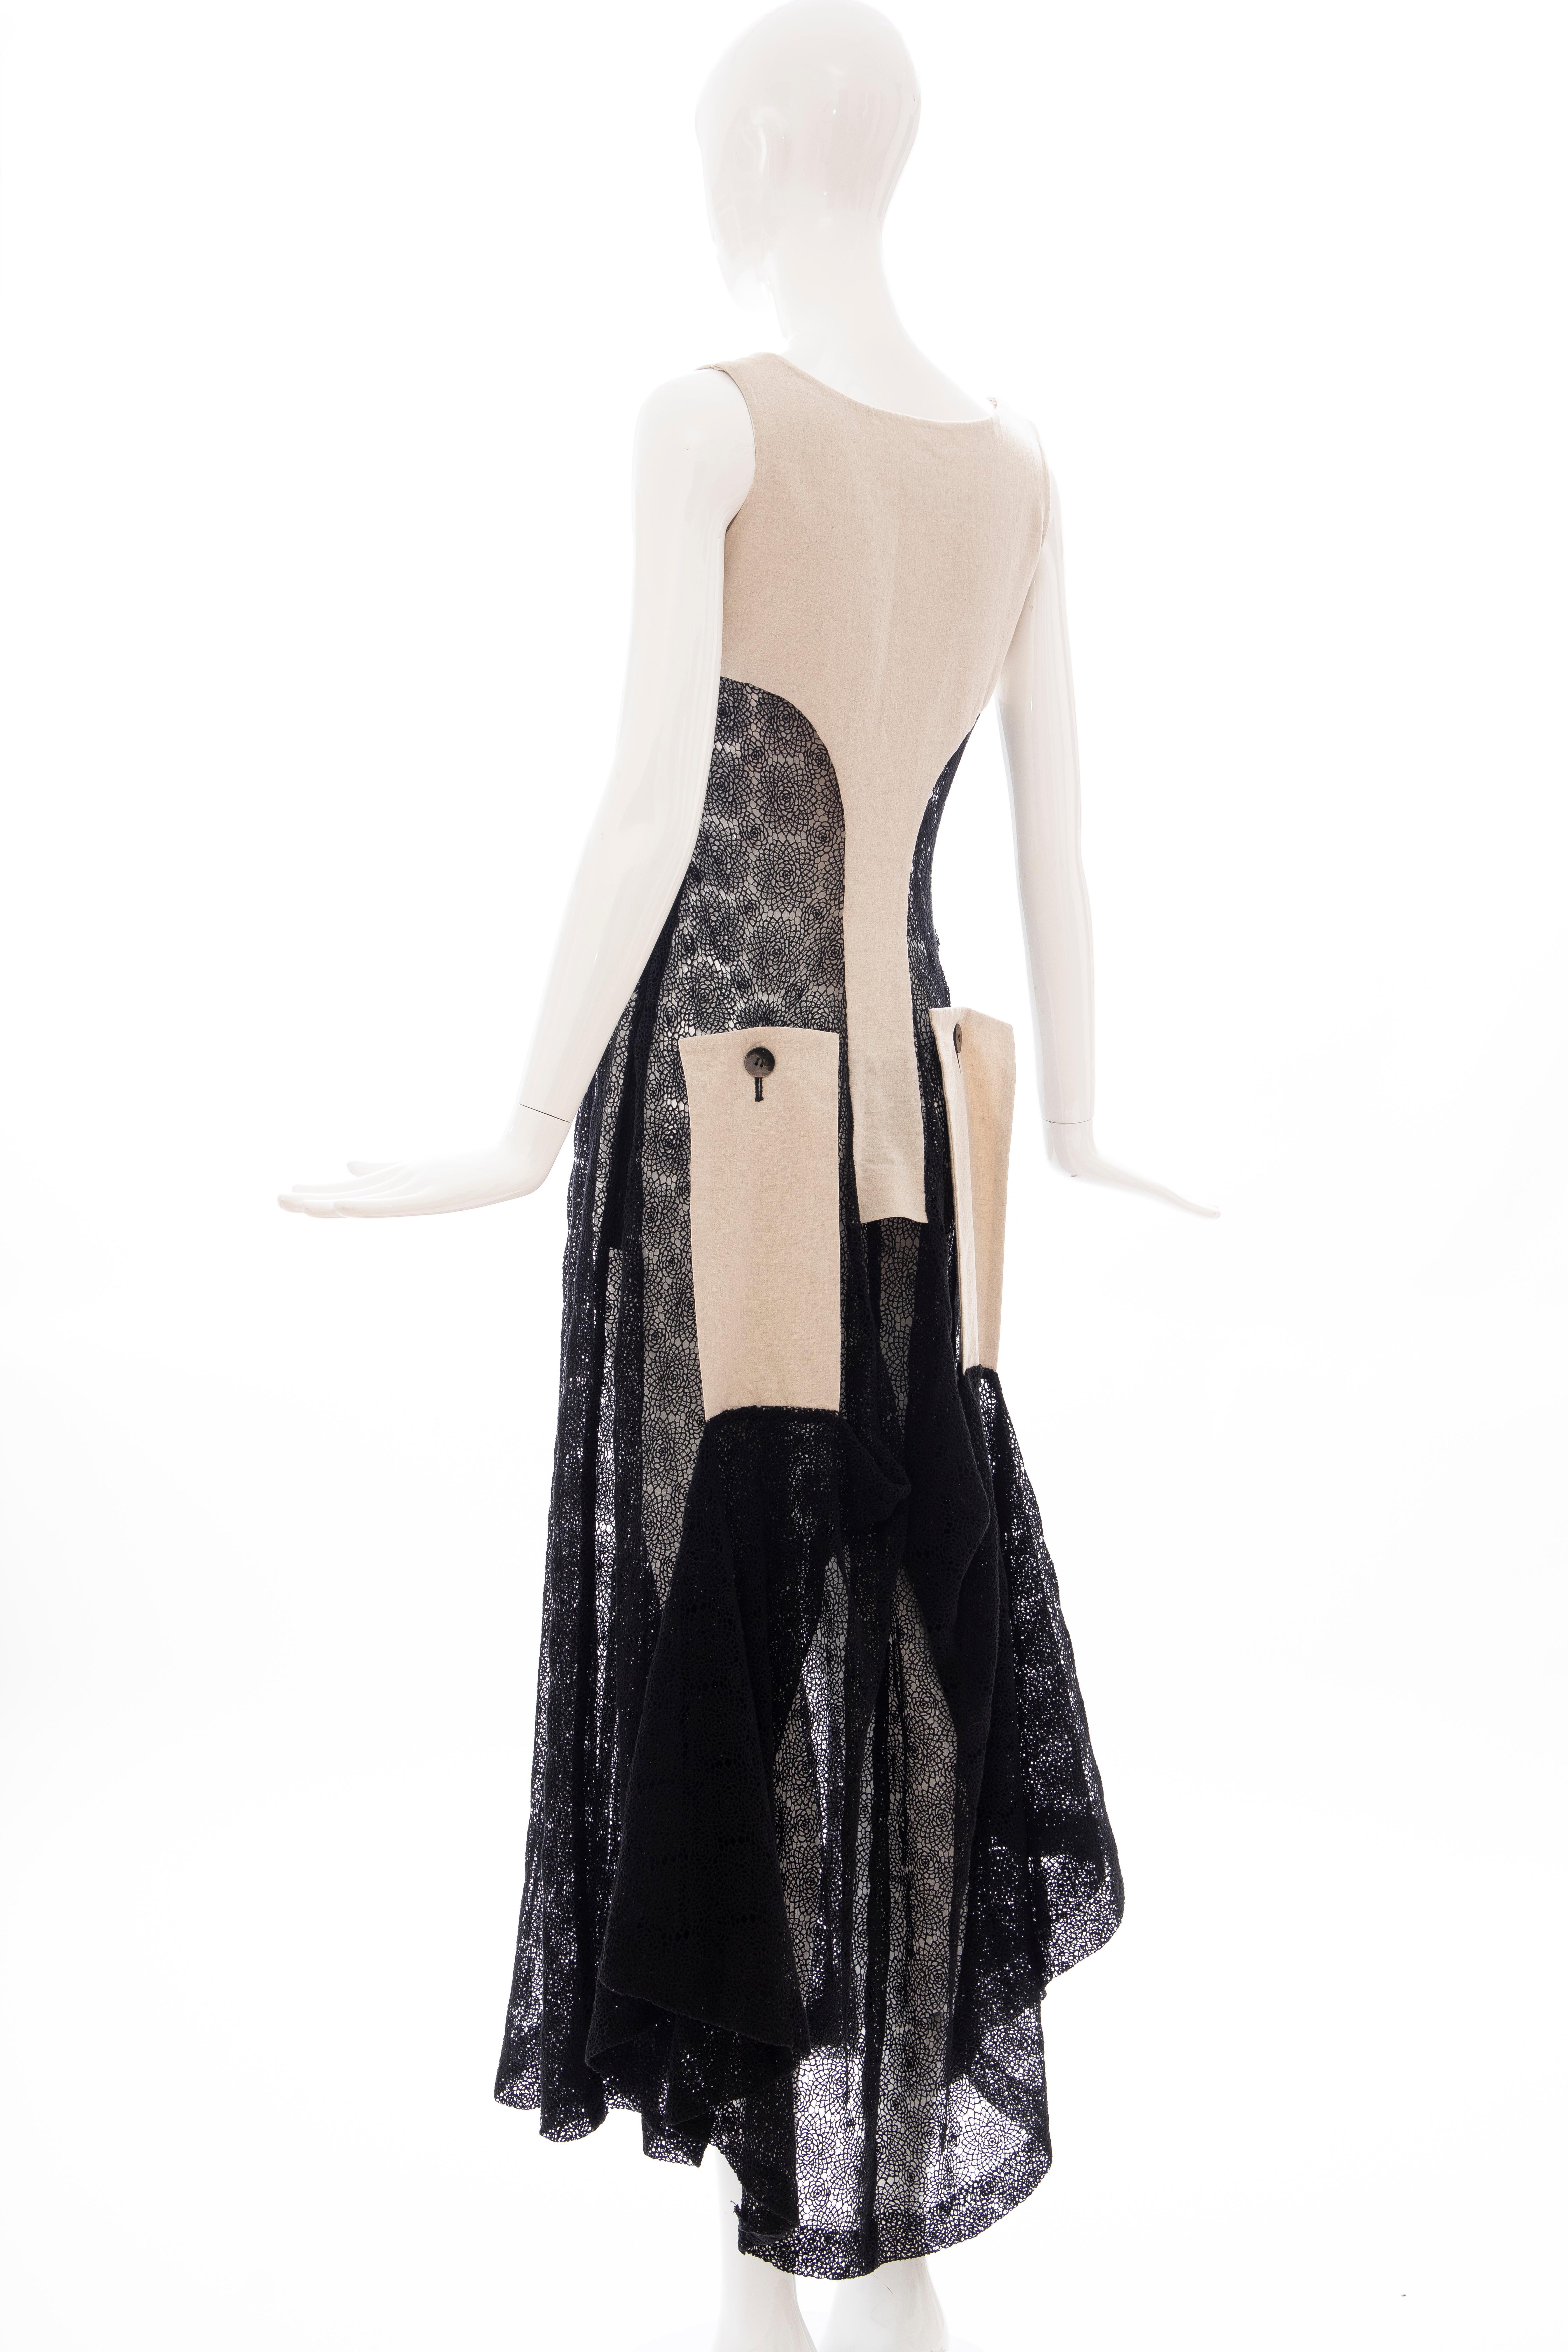 Yohji Yamamoto Runway Black Cotton Lace & Natural Linen Dress, Spring 2005 9